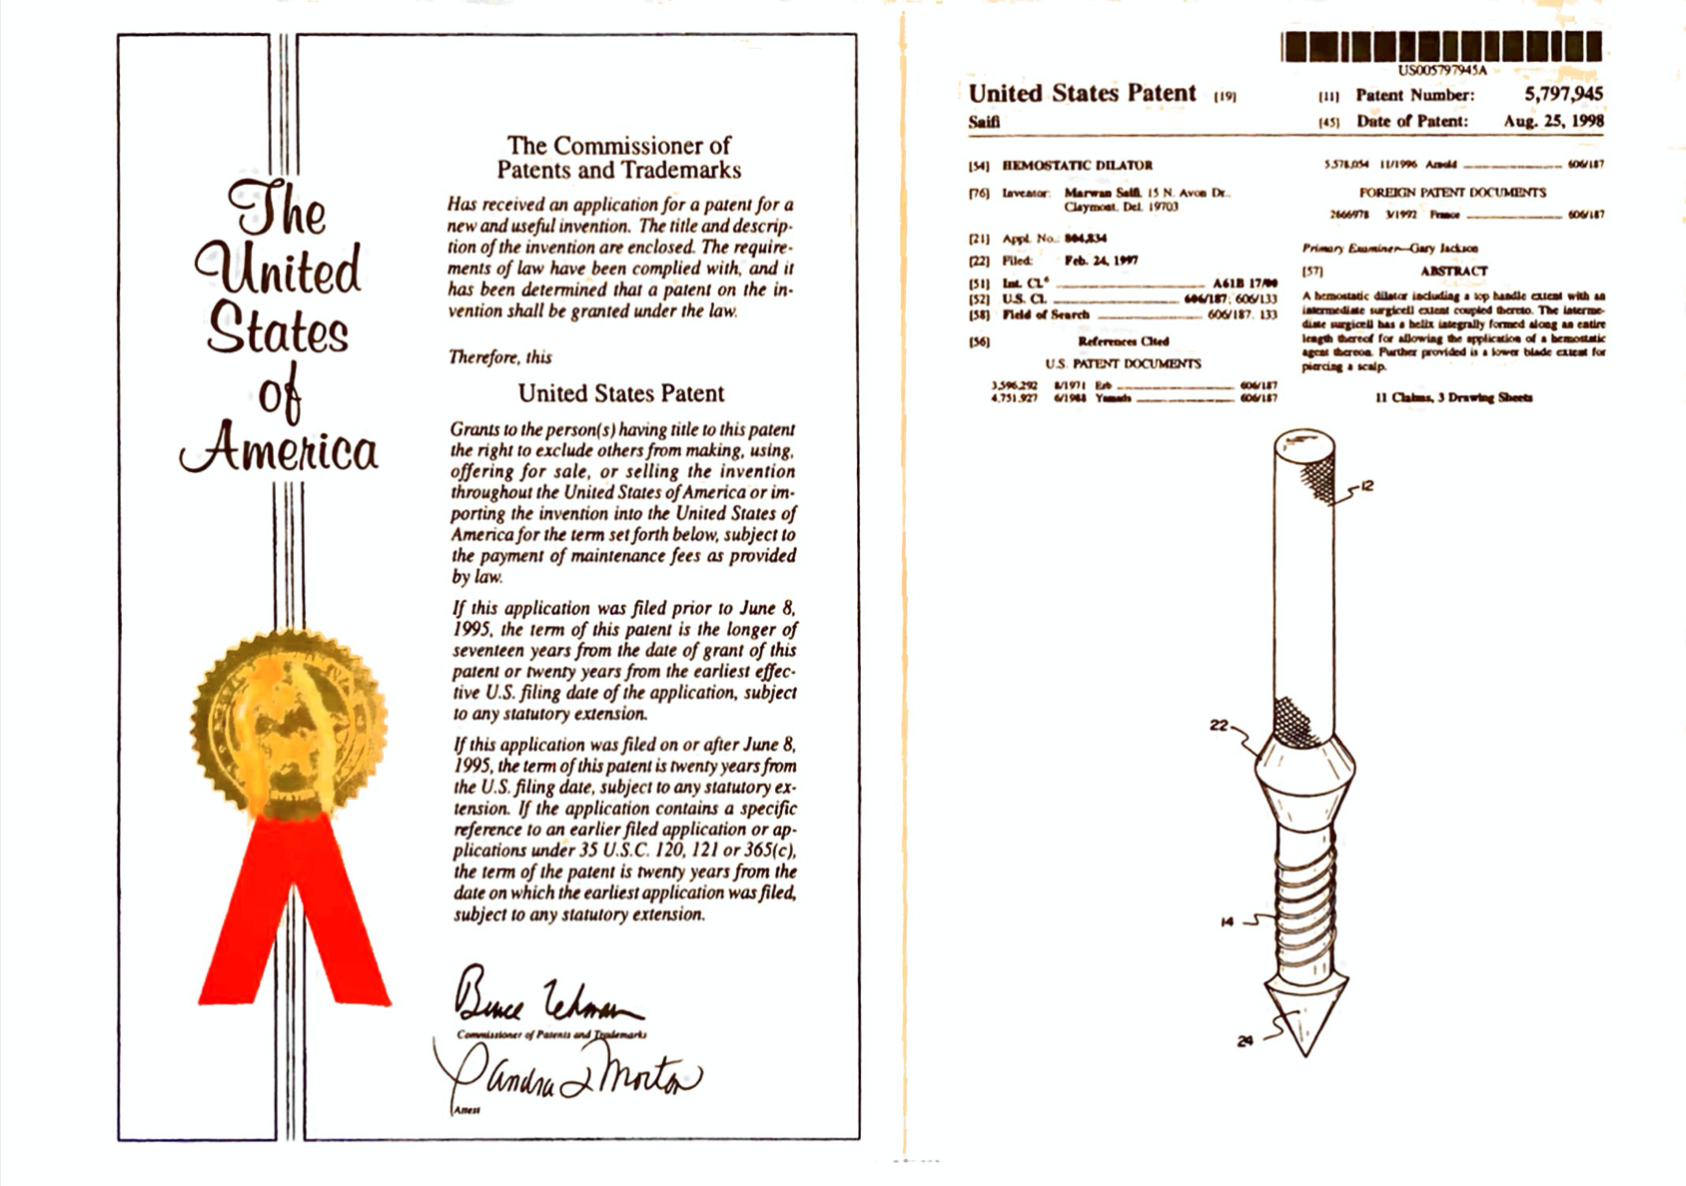 United States Patent- Saifi- Patent Number: 5,797,945 Hemostatic Dilator